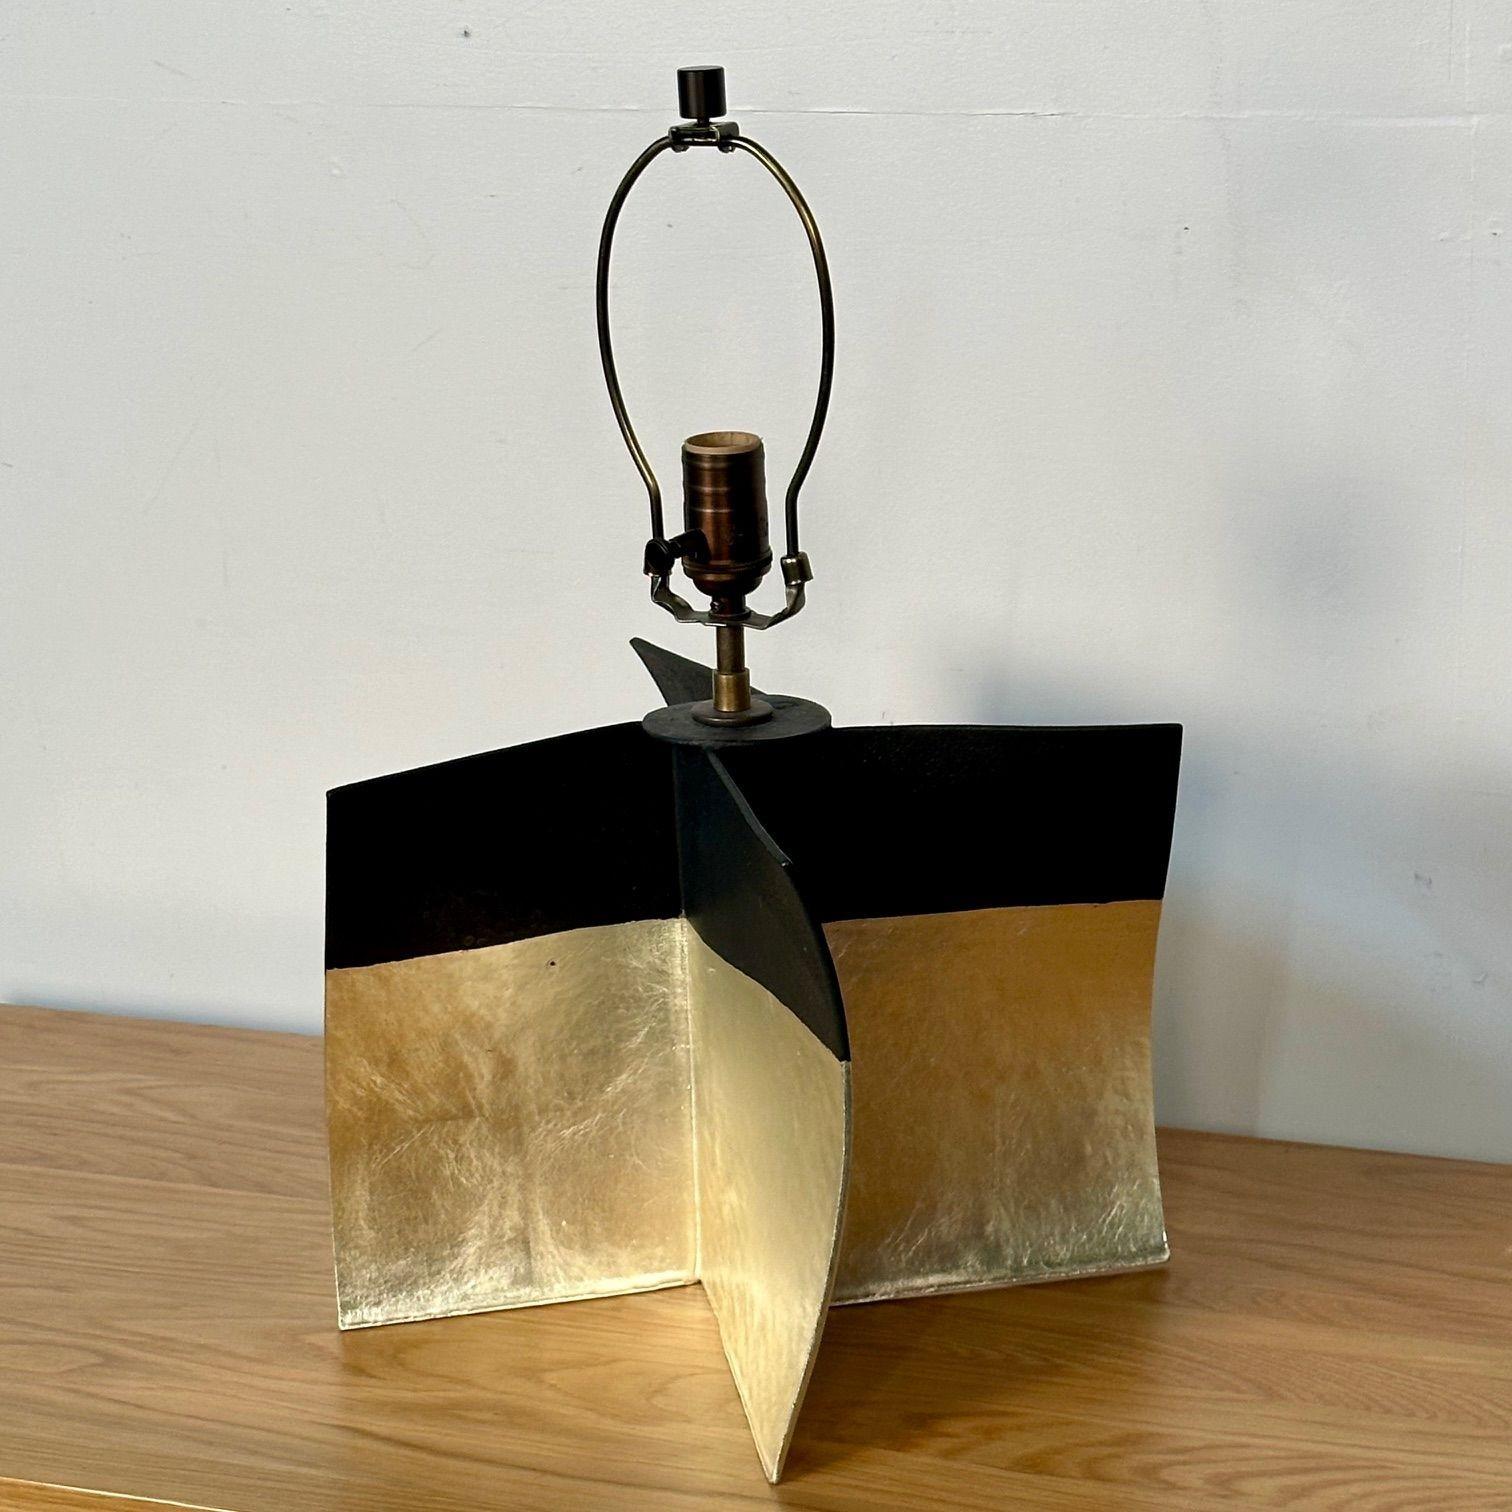 Dumais Made, Contemporary, Ceramic Croisillon Table Lamps, Gold Glaze, 2021 For Sale 4